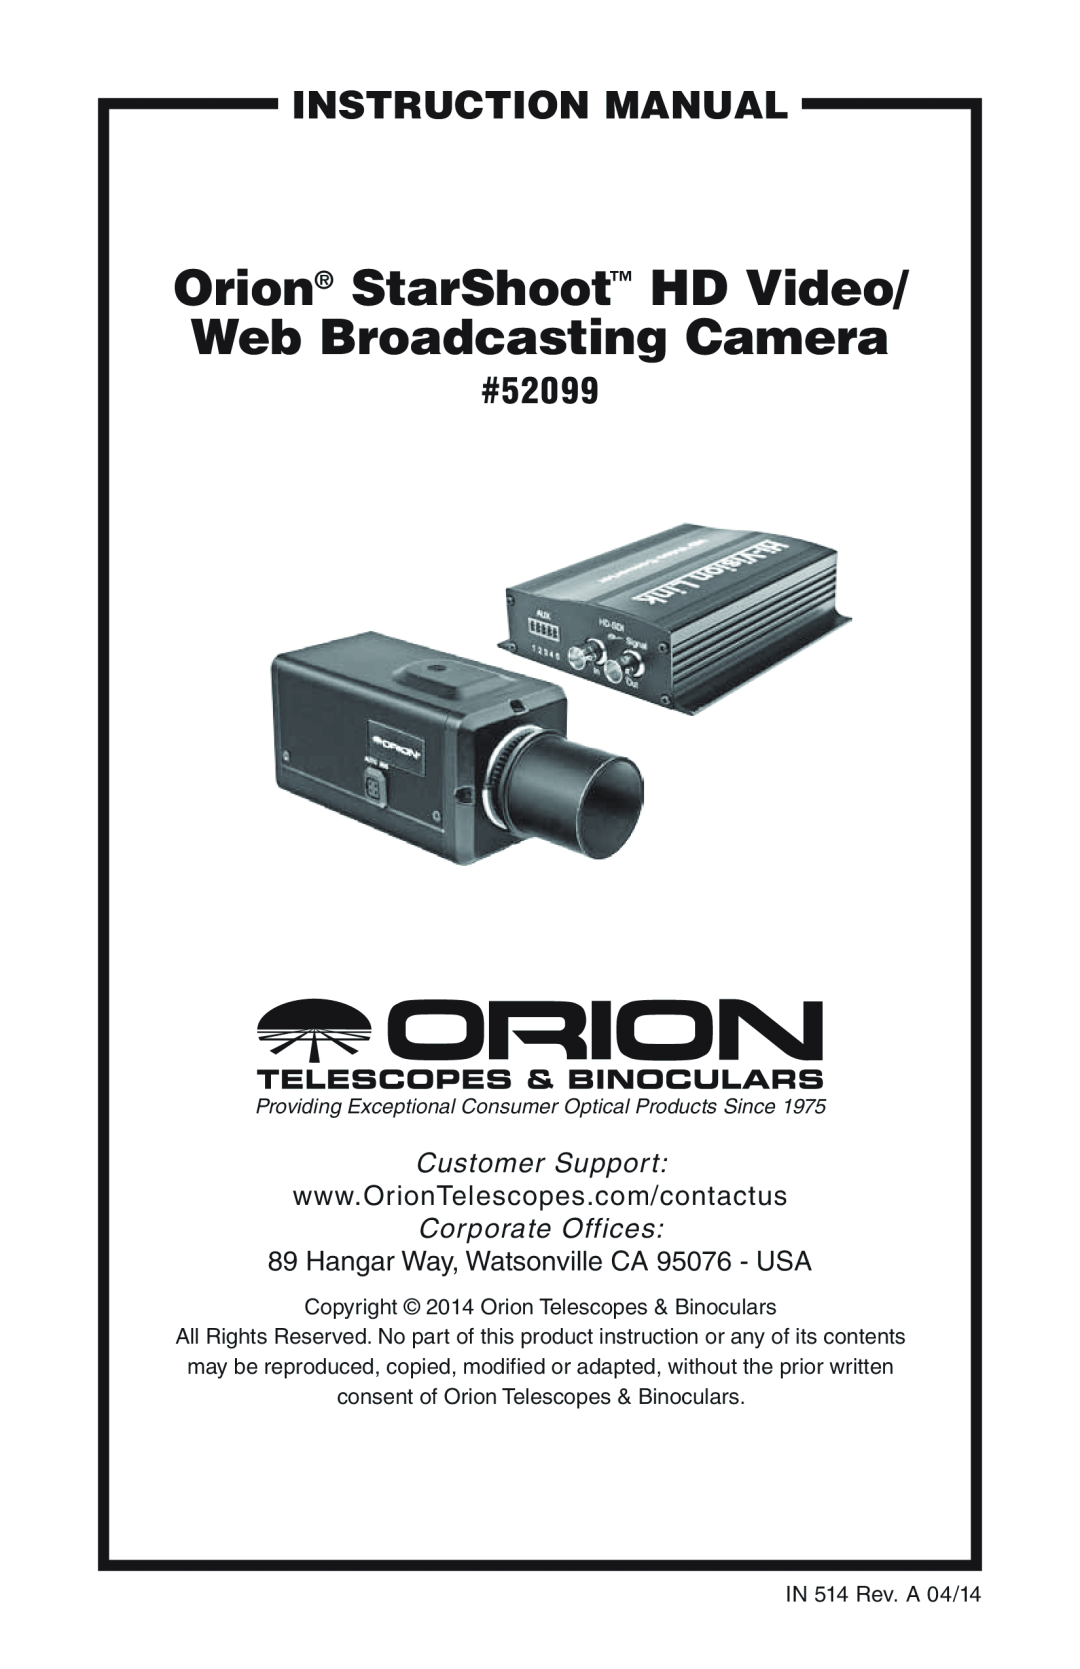 Orion 52099 instruction manual Hangar Way, Watsonville CA 95076 - USA, Orion StarShoot HD Video/ Web Broadcasting Camera 